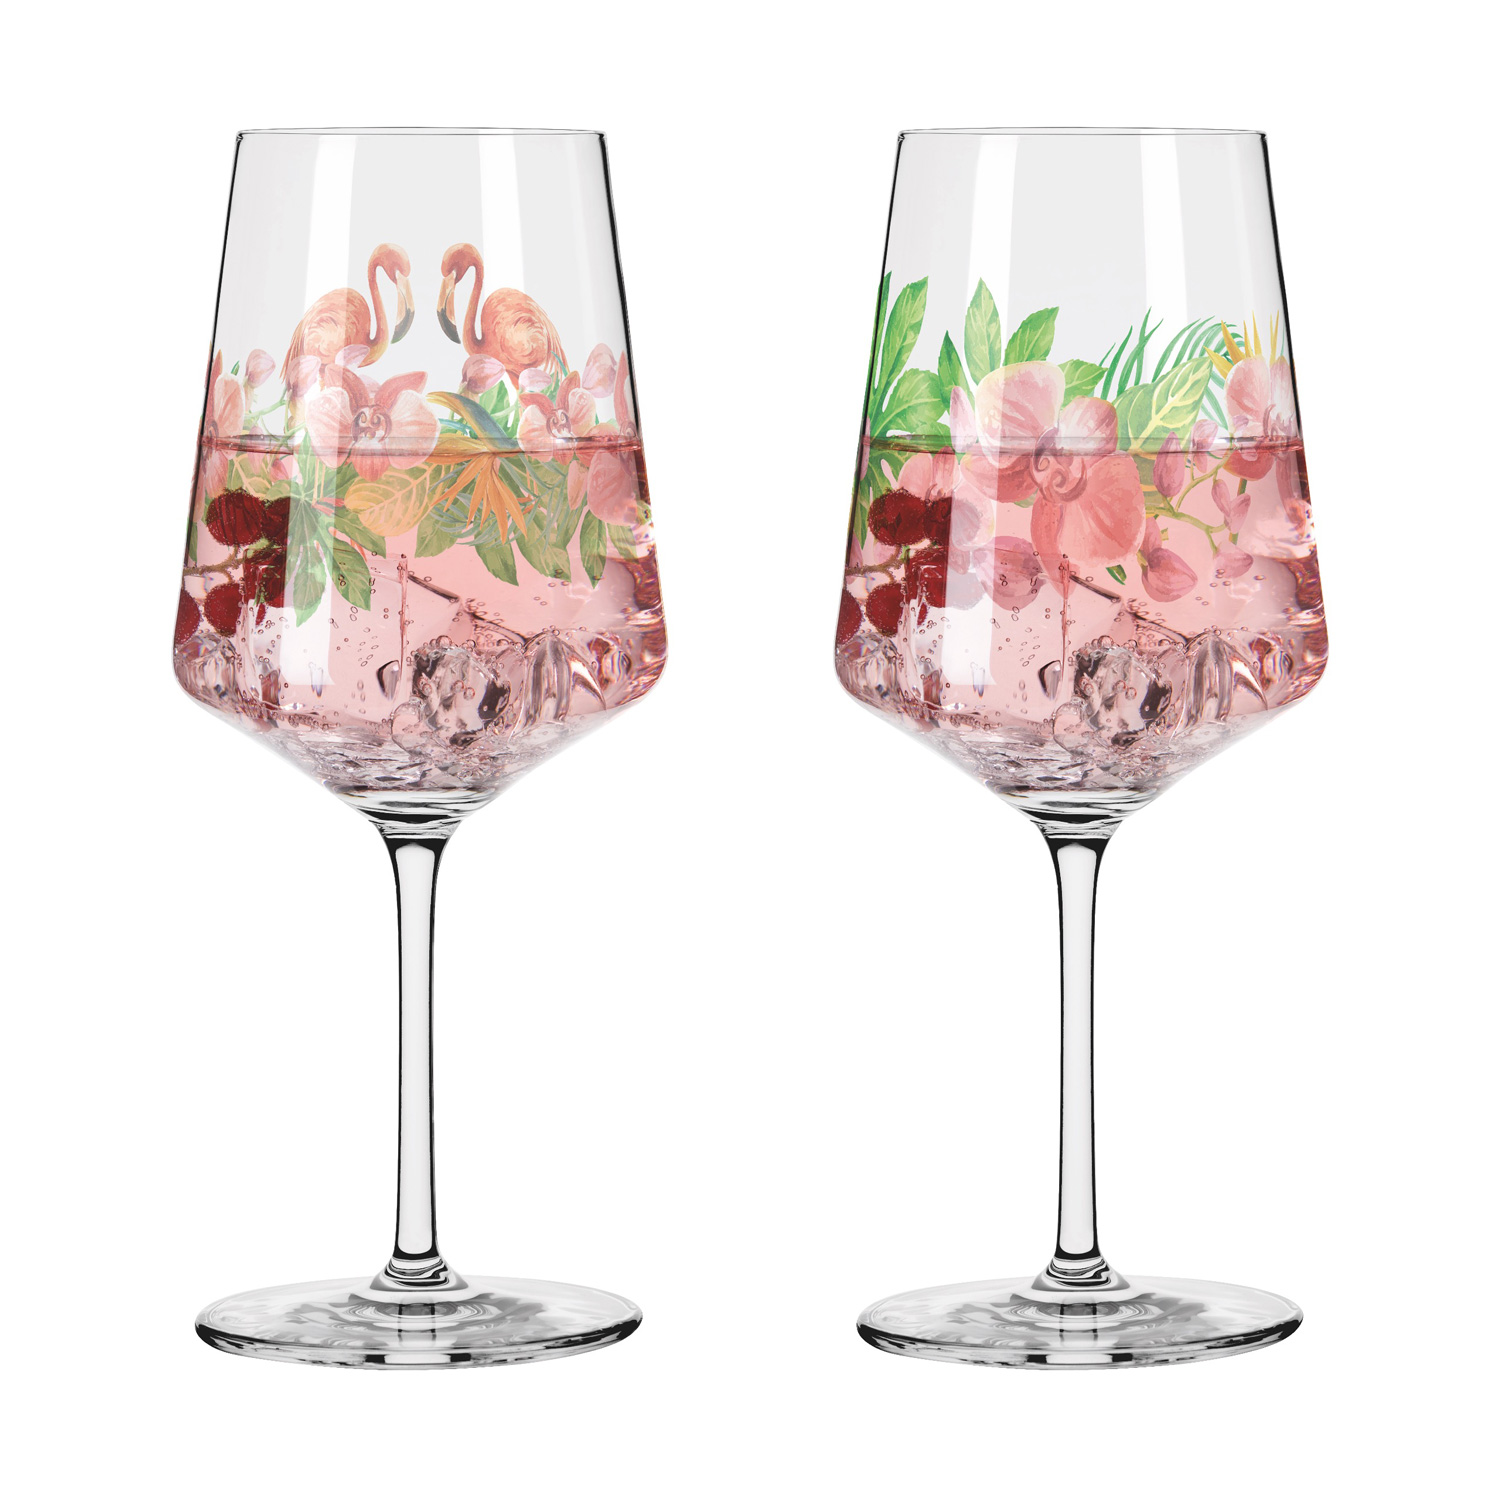 Sommersonett Wine Glass 2-pack, Ritzenhoff - 5 RoyalDesign NO: 